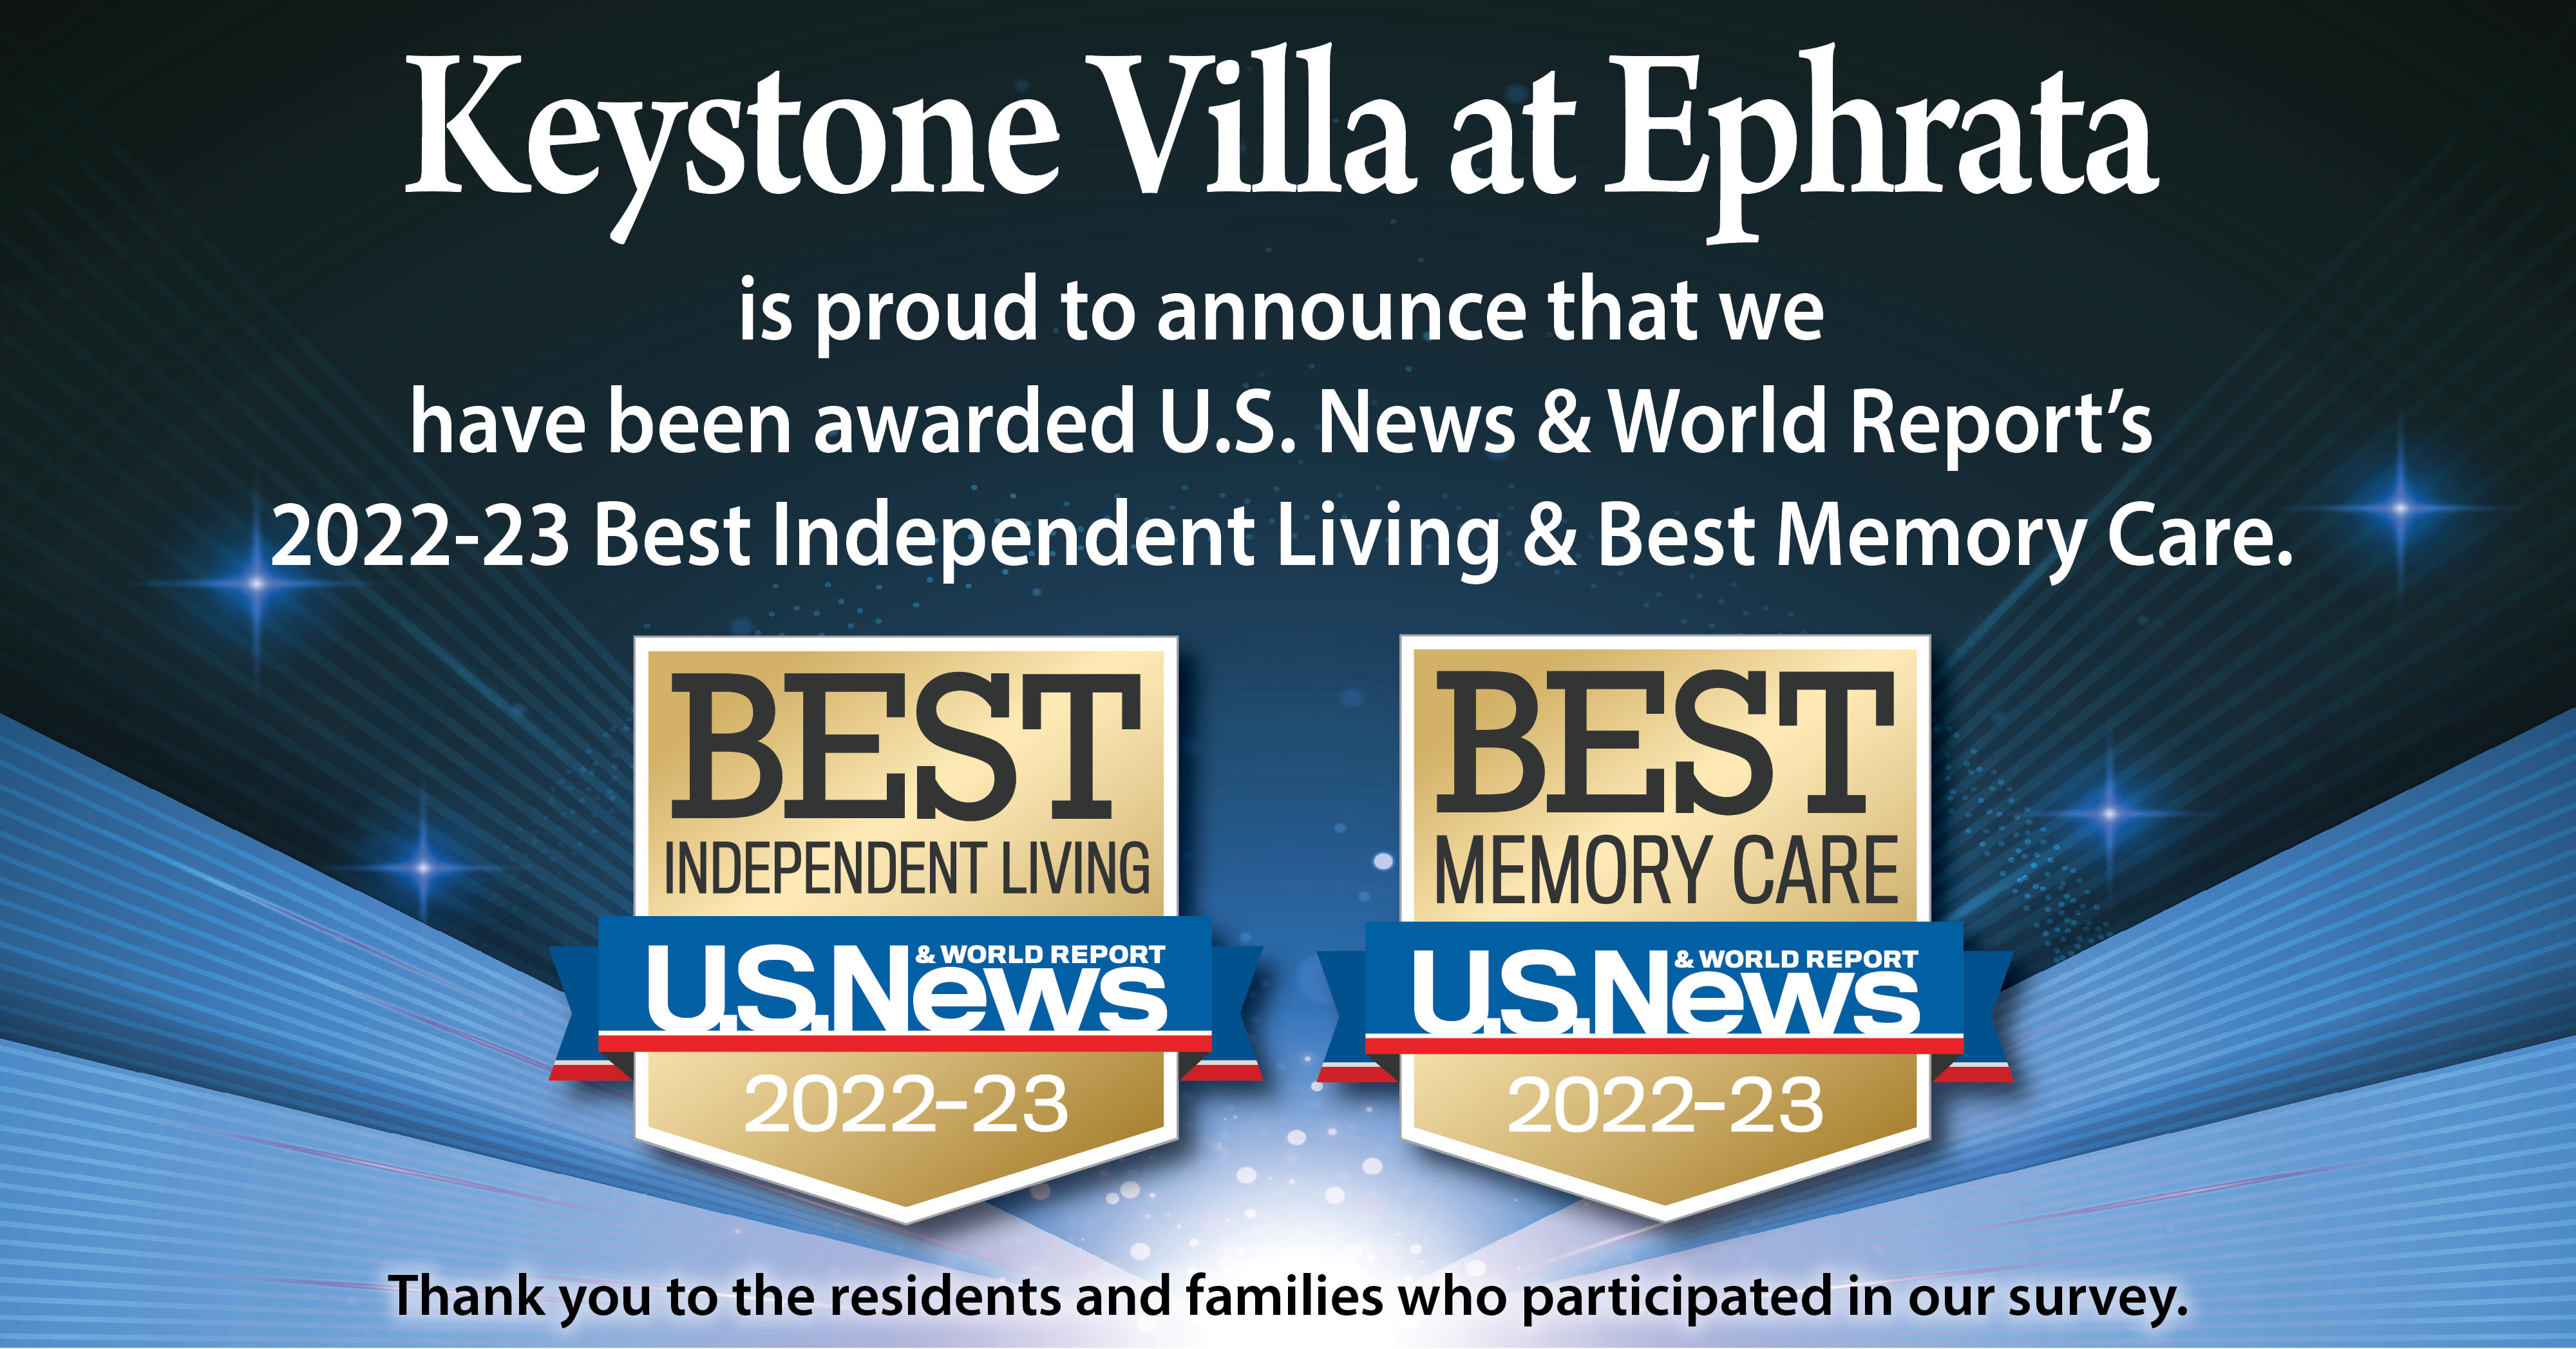 US News Best Senior Living Award 2022 for Keystone Villa at Ephrata